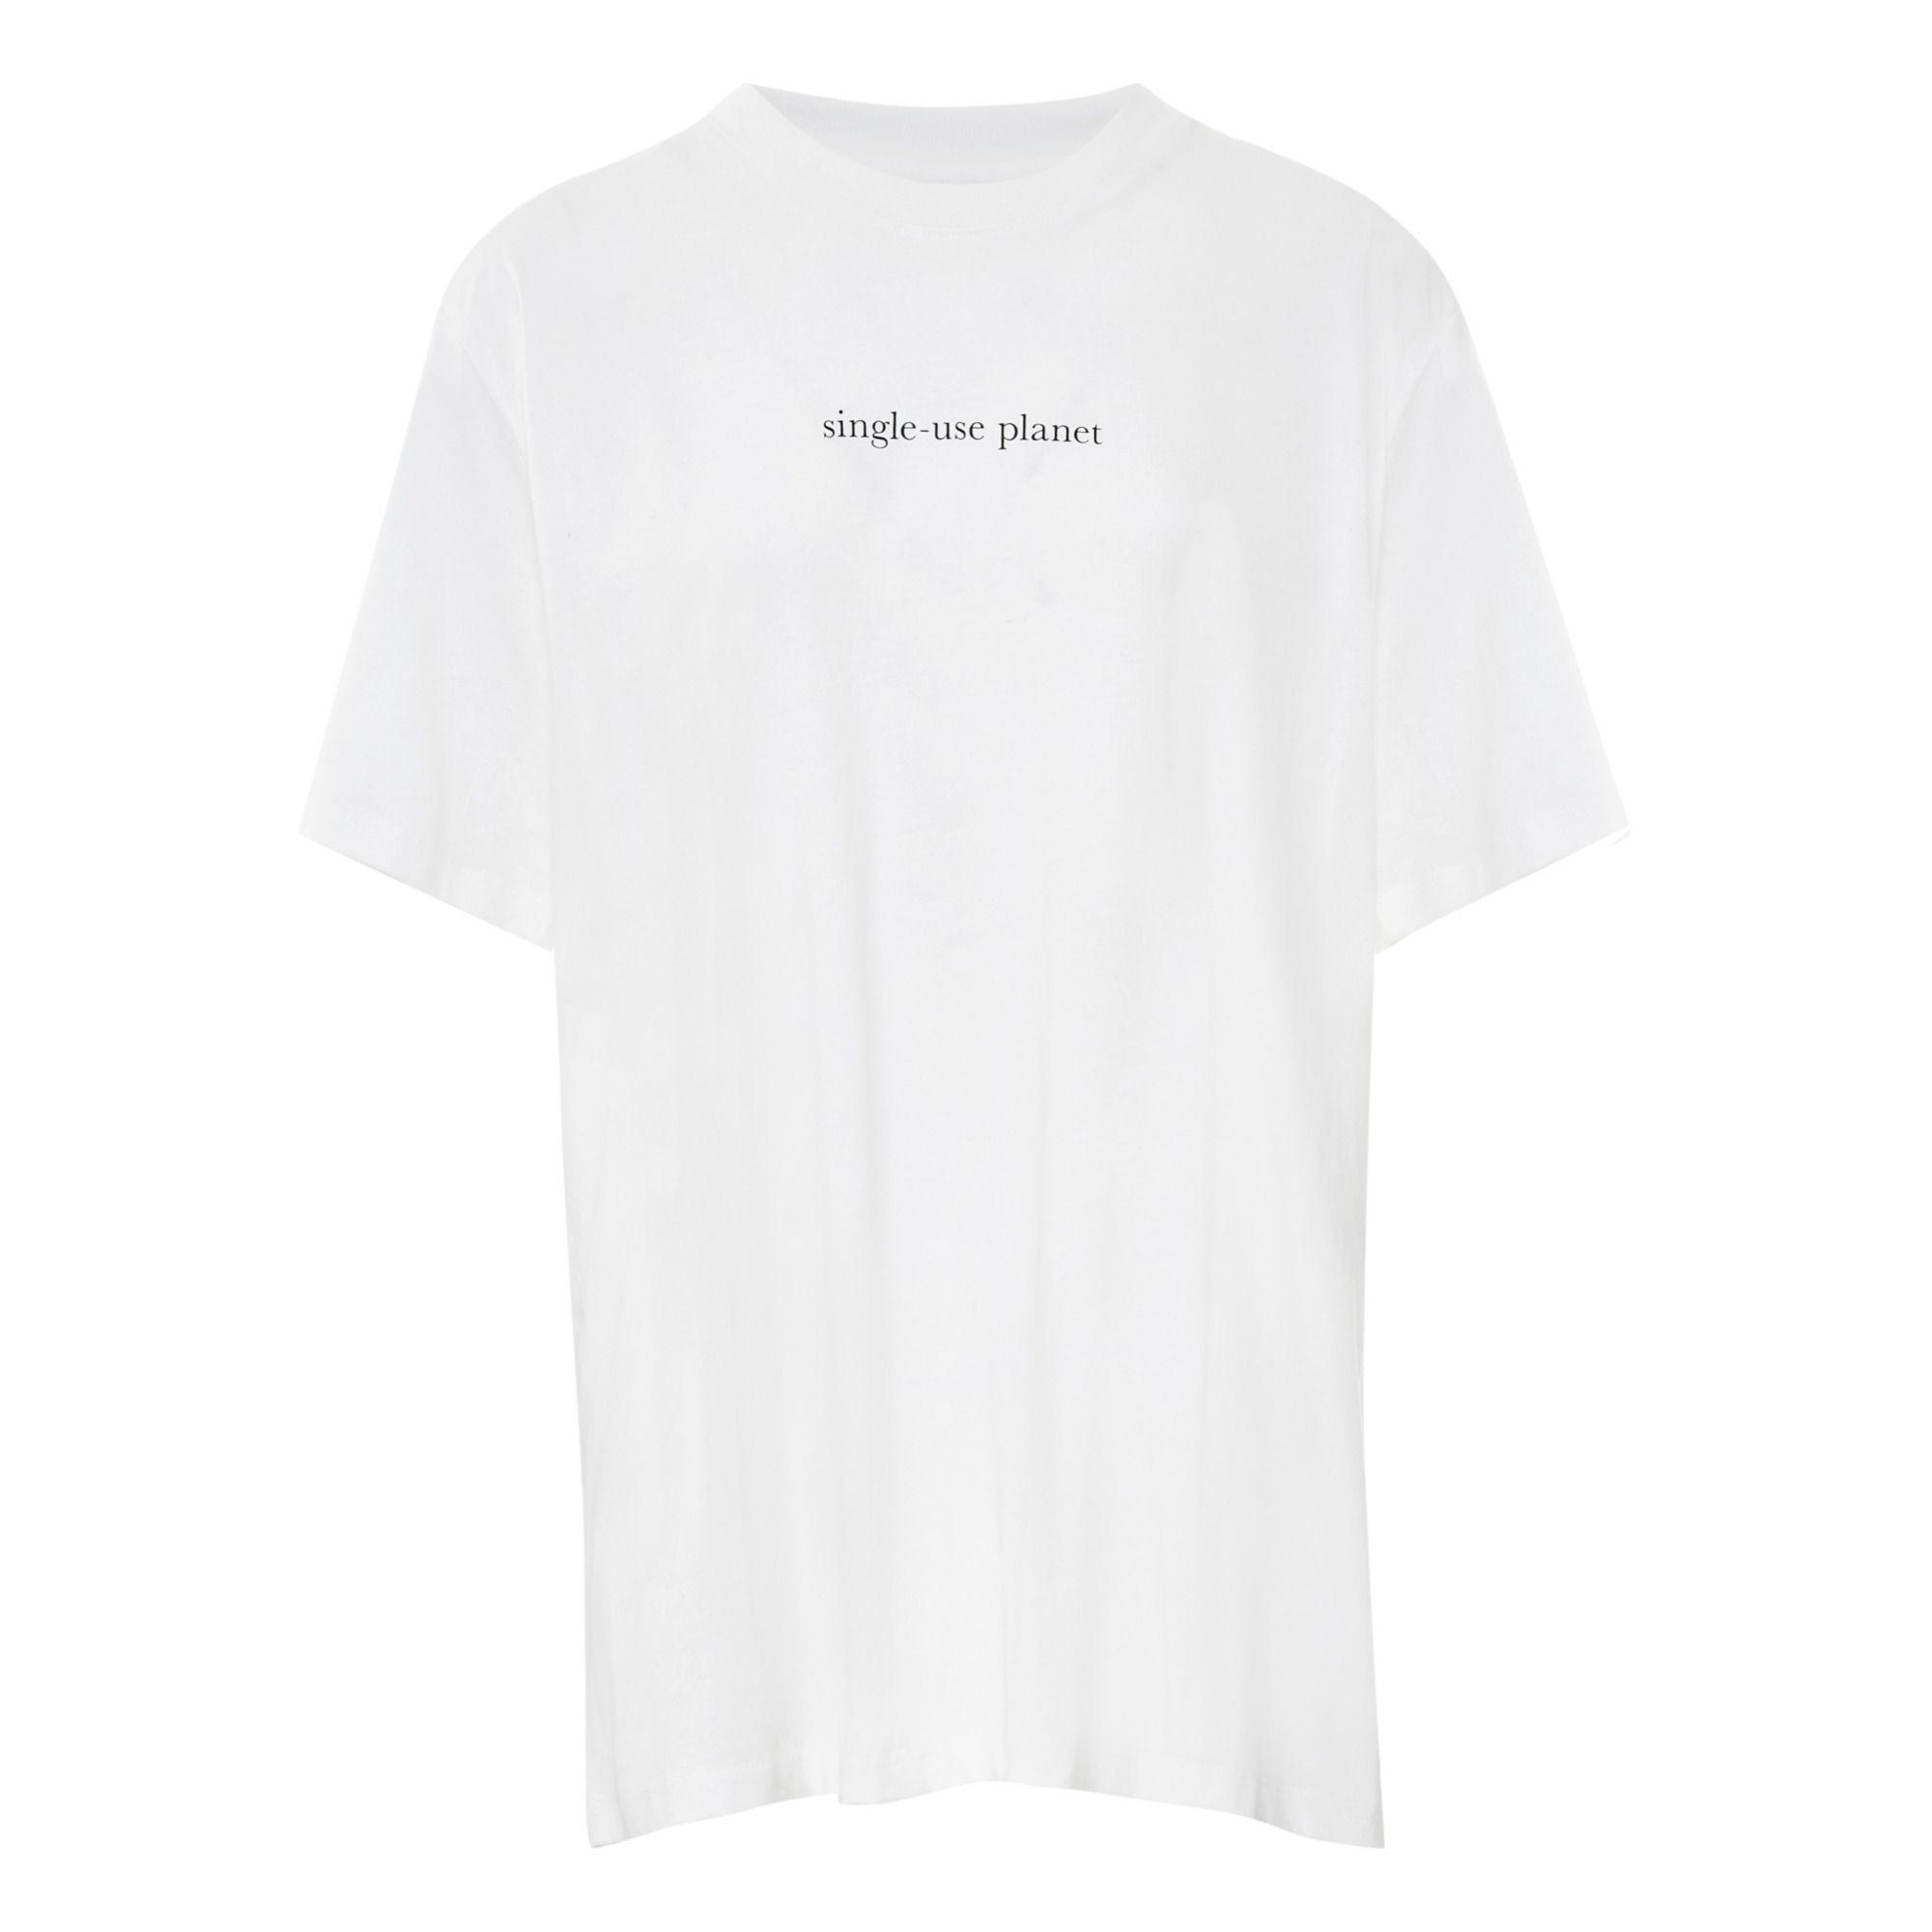 Kowtow - T-shirt Single-Use Planet Coton Bio - Femme - Blanc